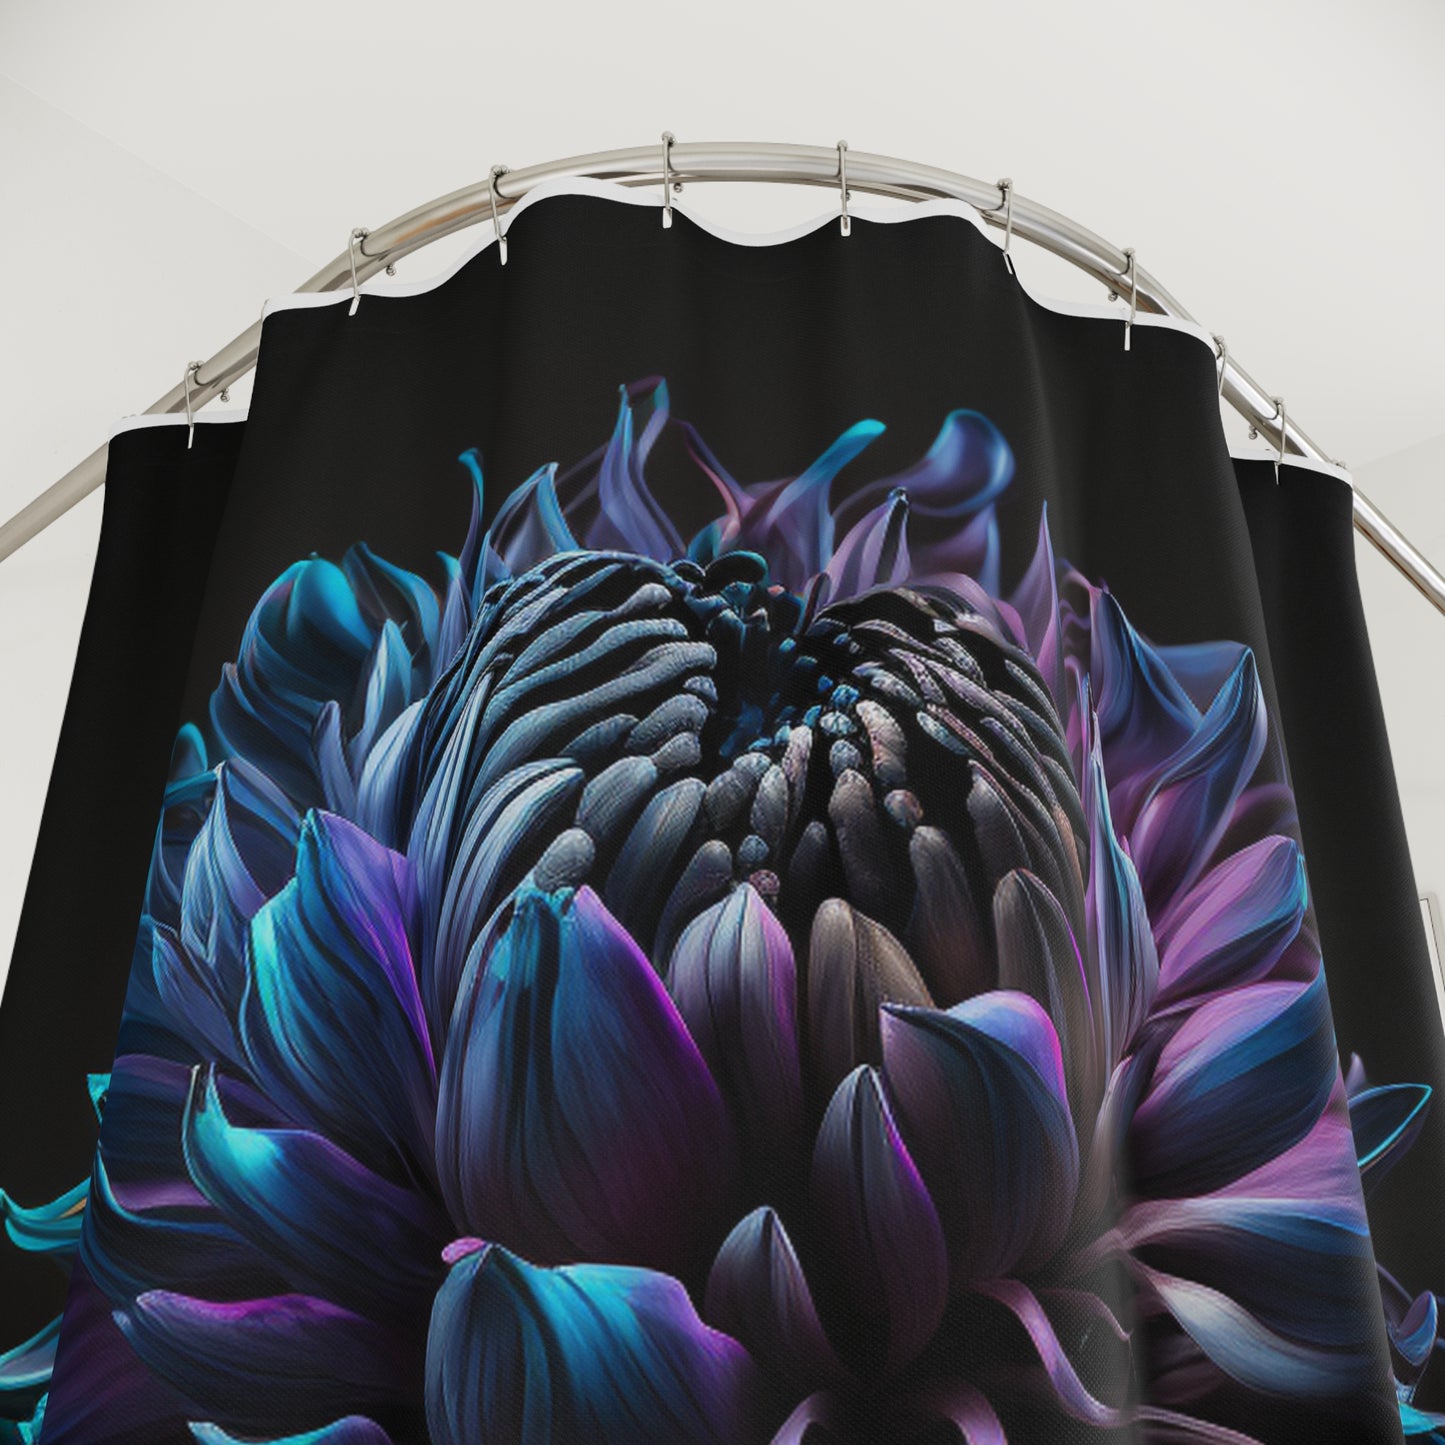 Polyester Shower Curtain Dahlia Purple 3